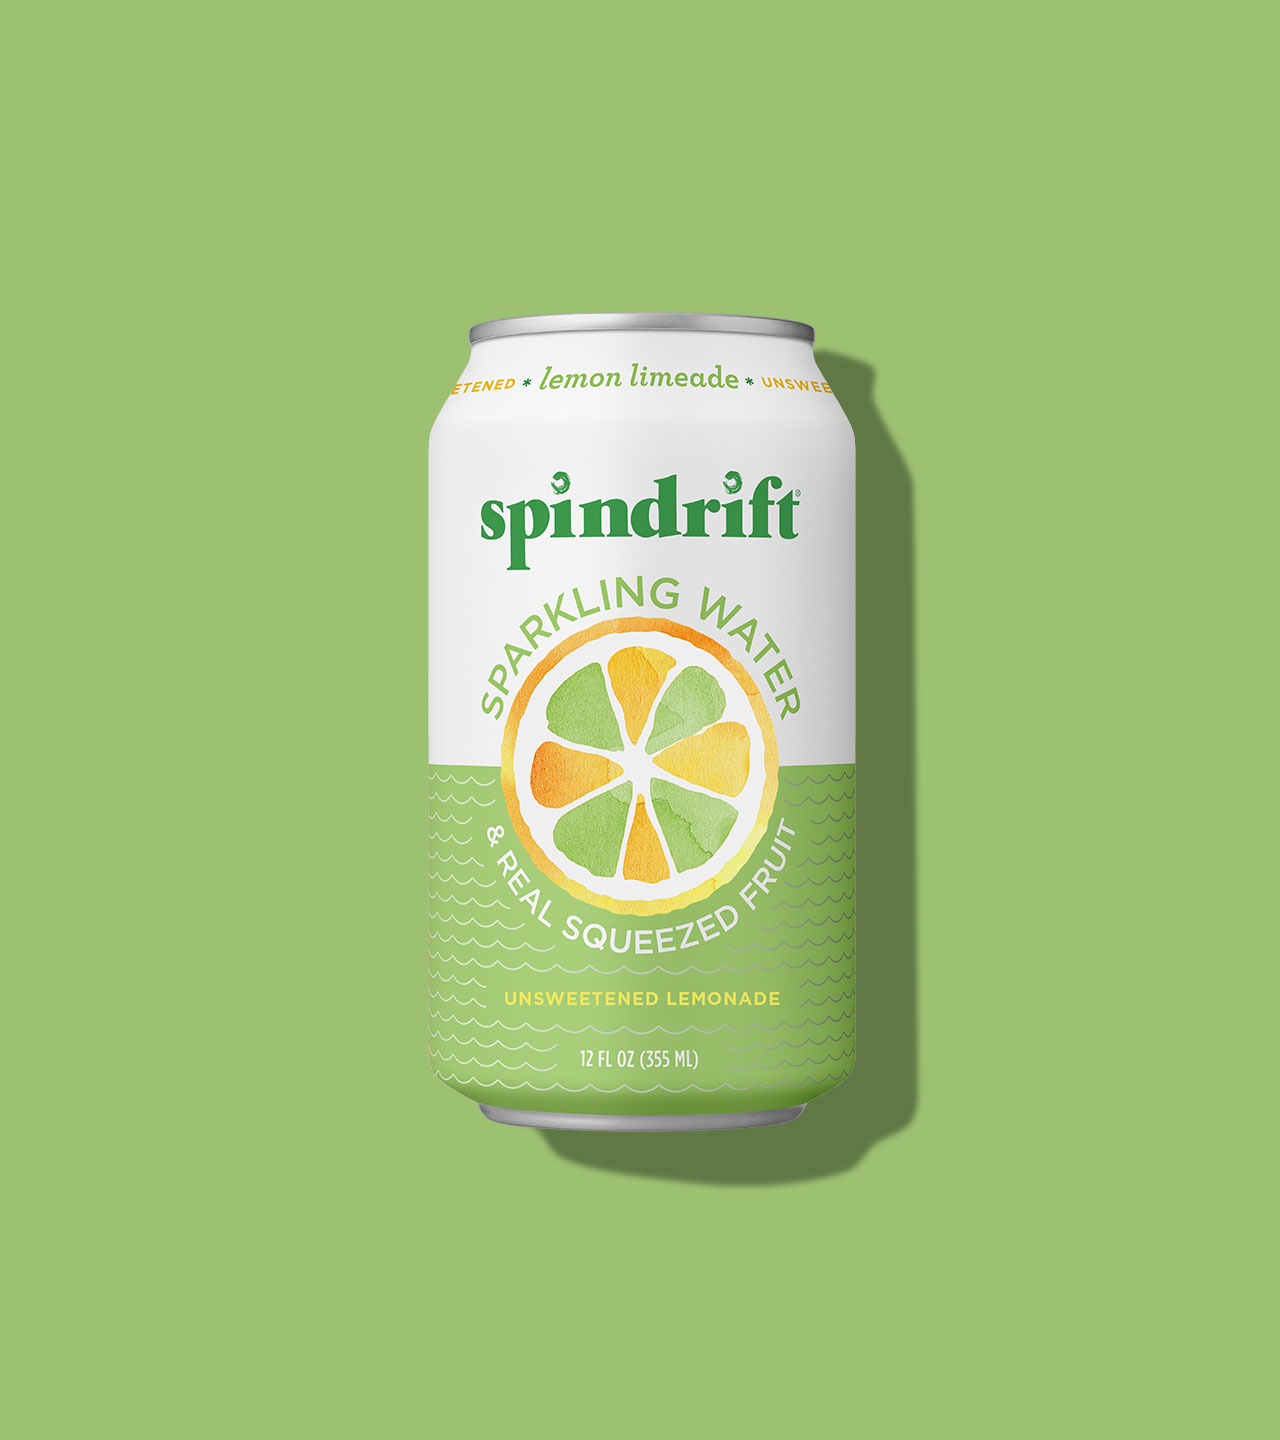 Spindrift Lemonade Packaging, Branding and Design by Colony